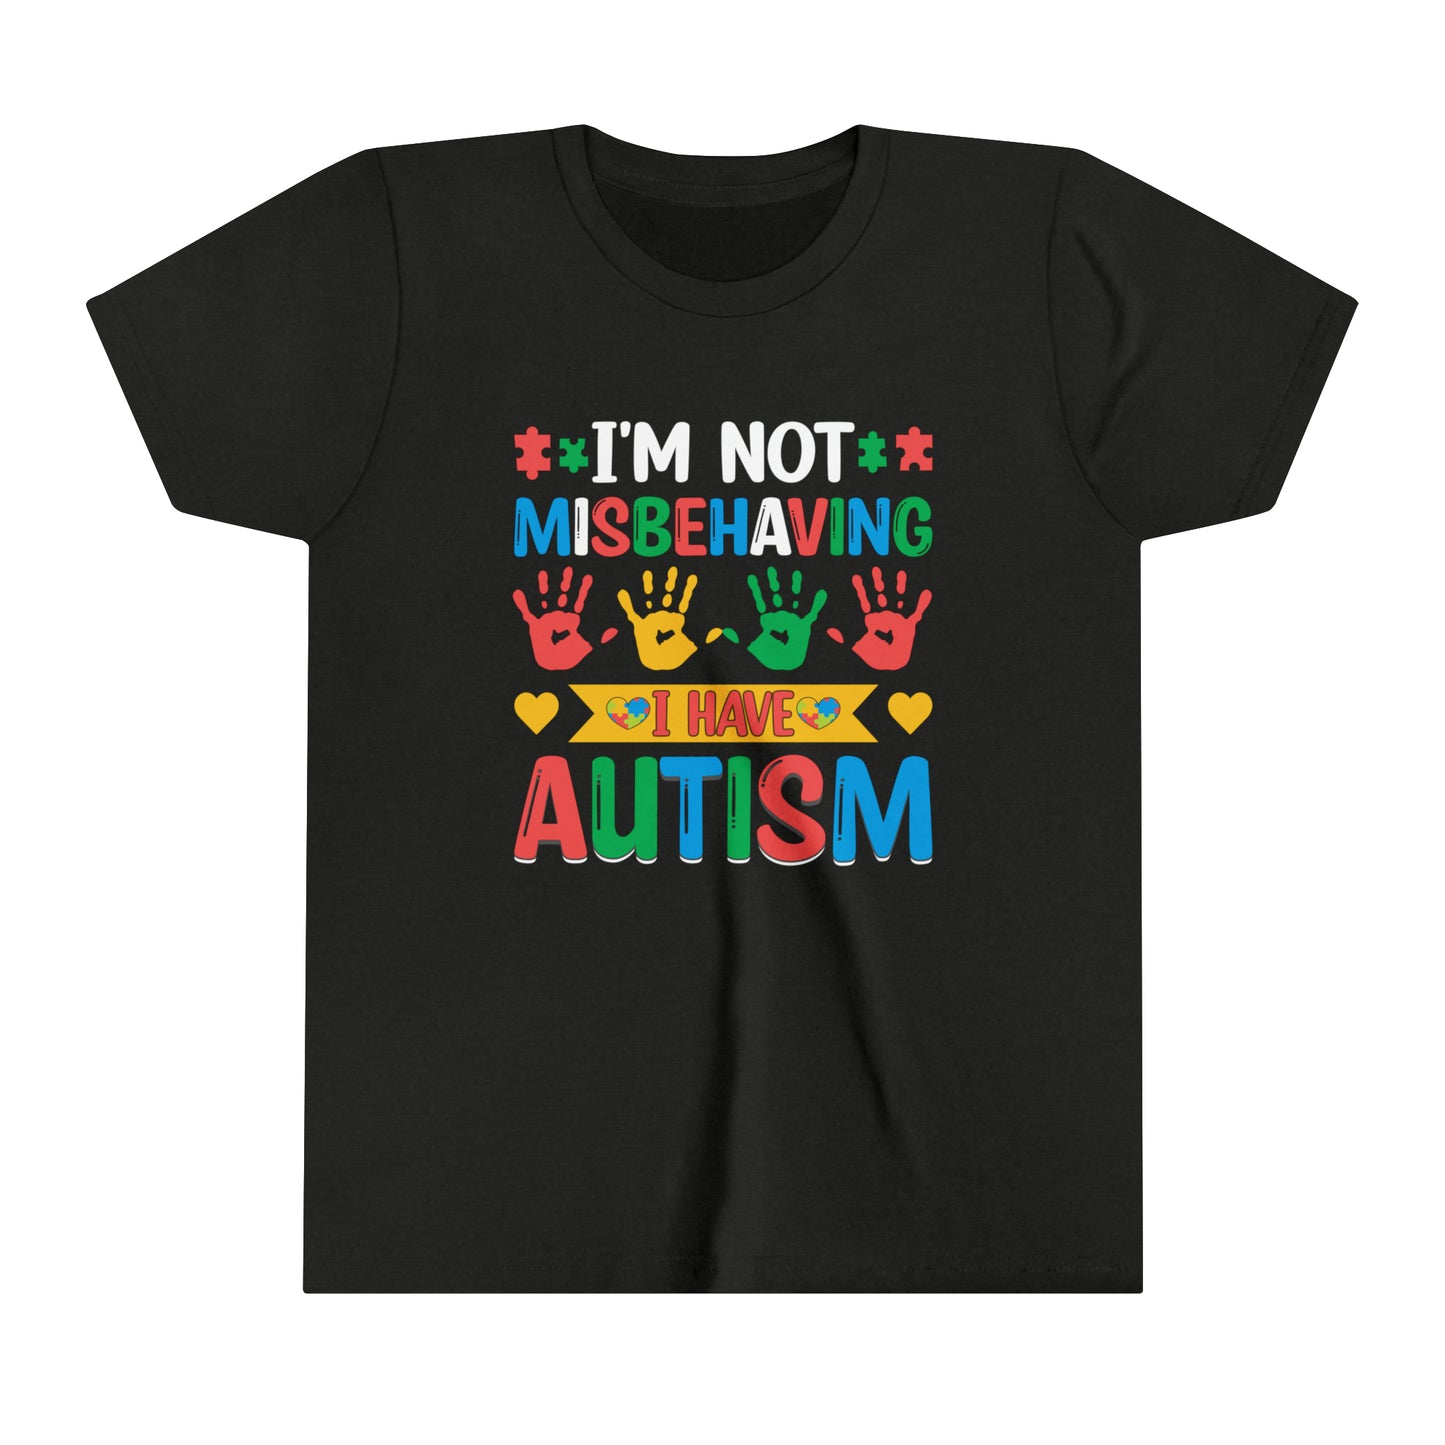 I'm not misbehaving, I have Autism Advocate Youth Shirt